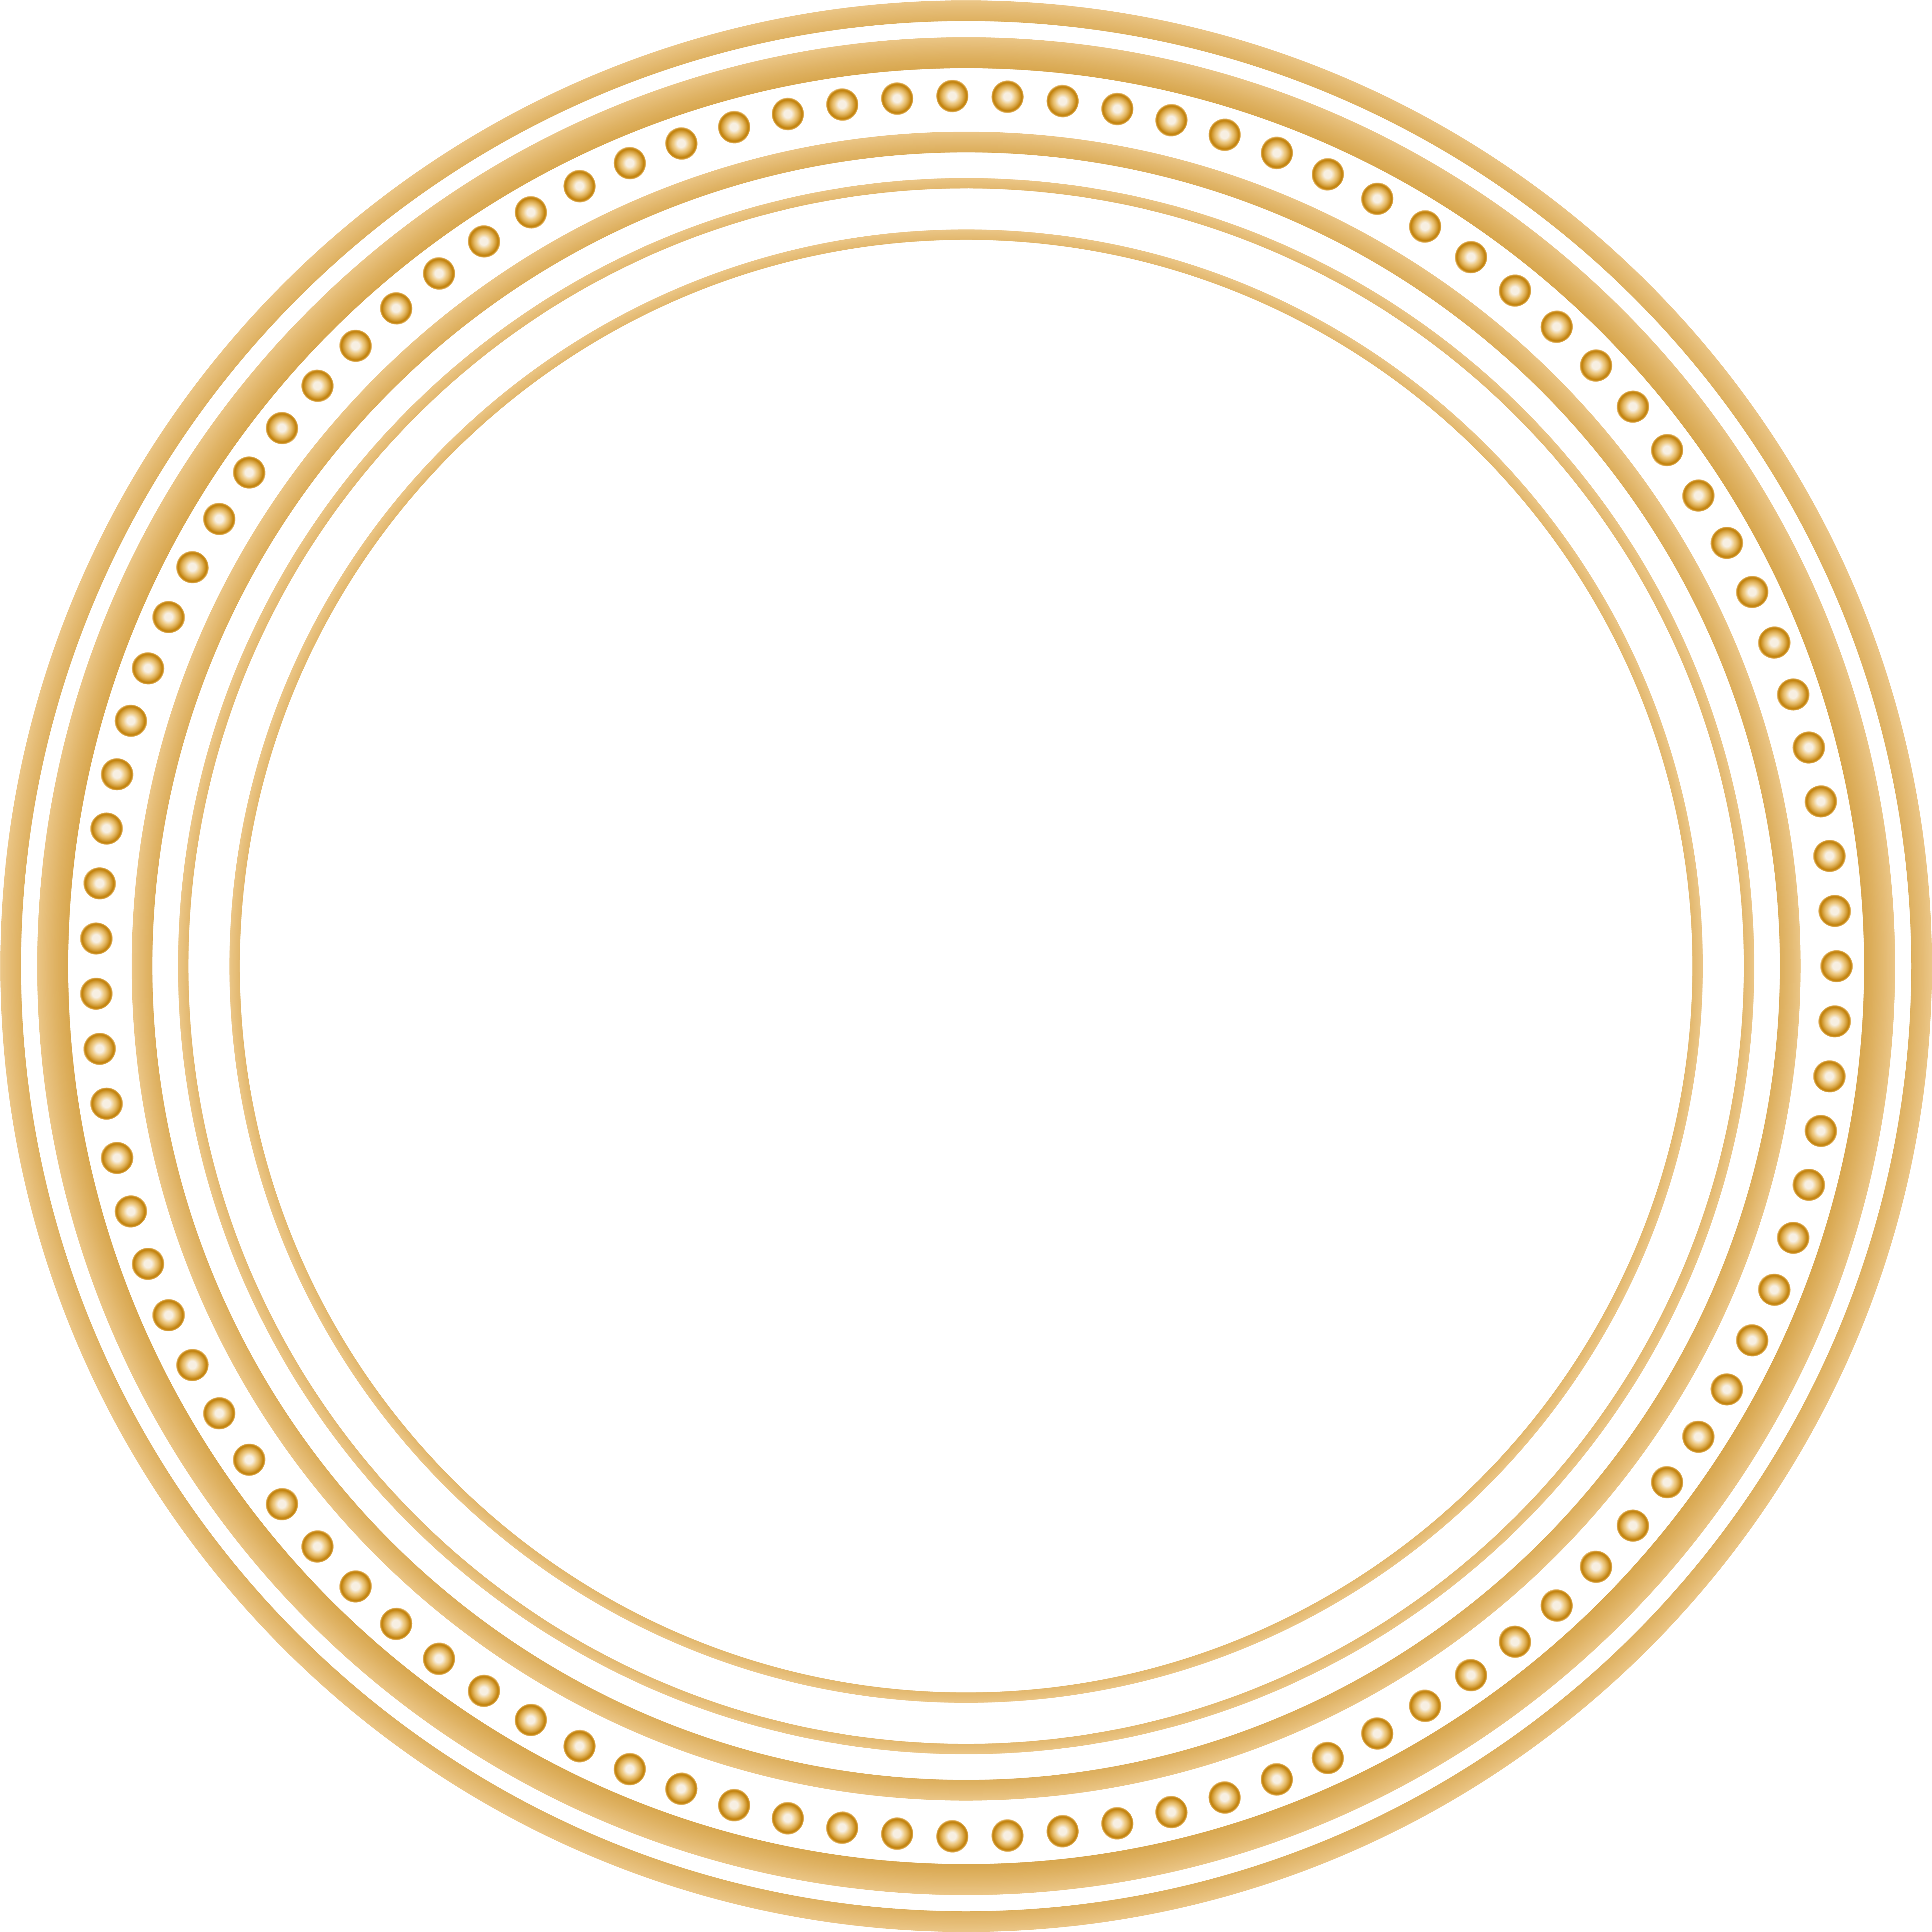 Circle cadre bordure PNG Image Transparente